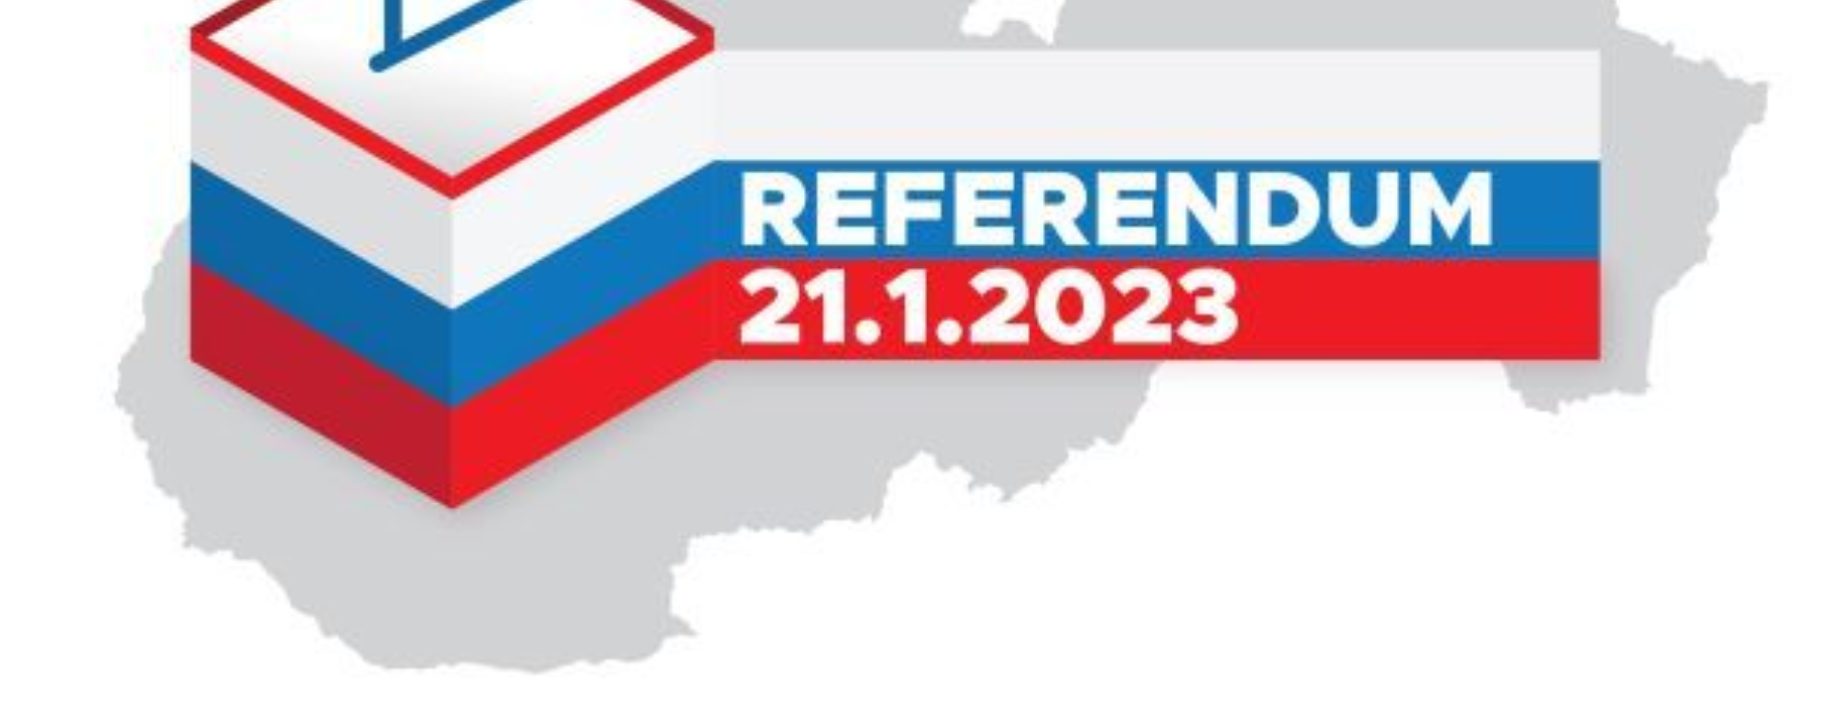 Plagat referendum 2023 610890 sm